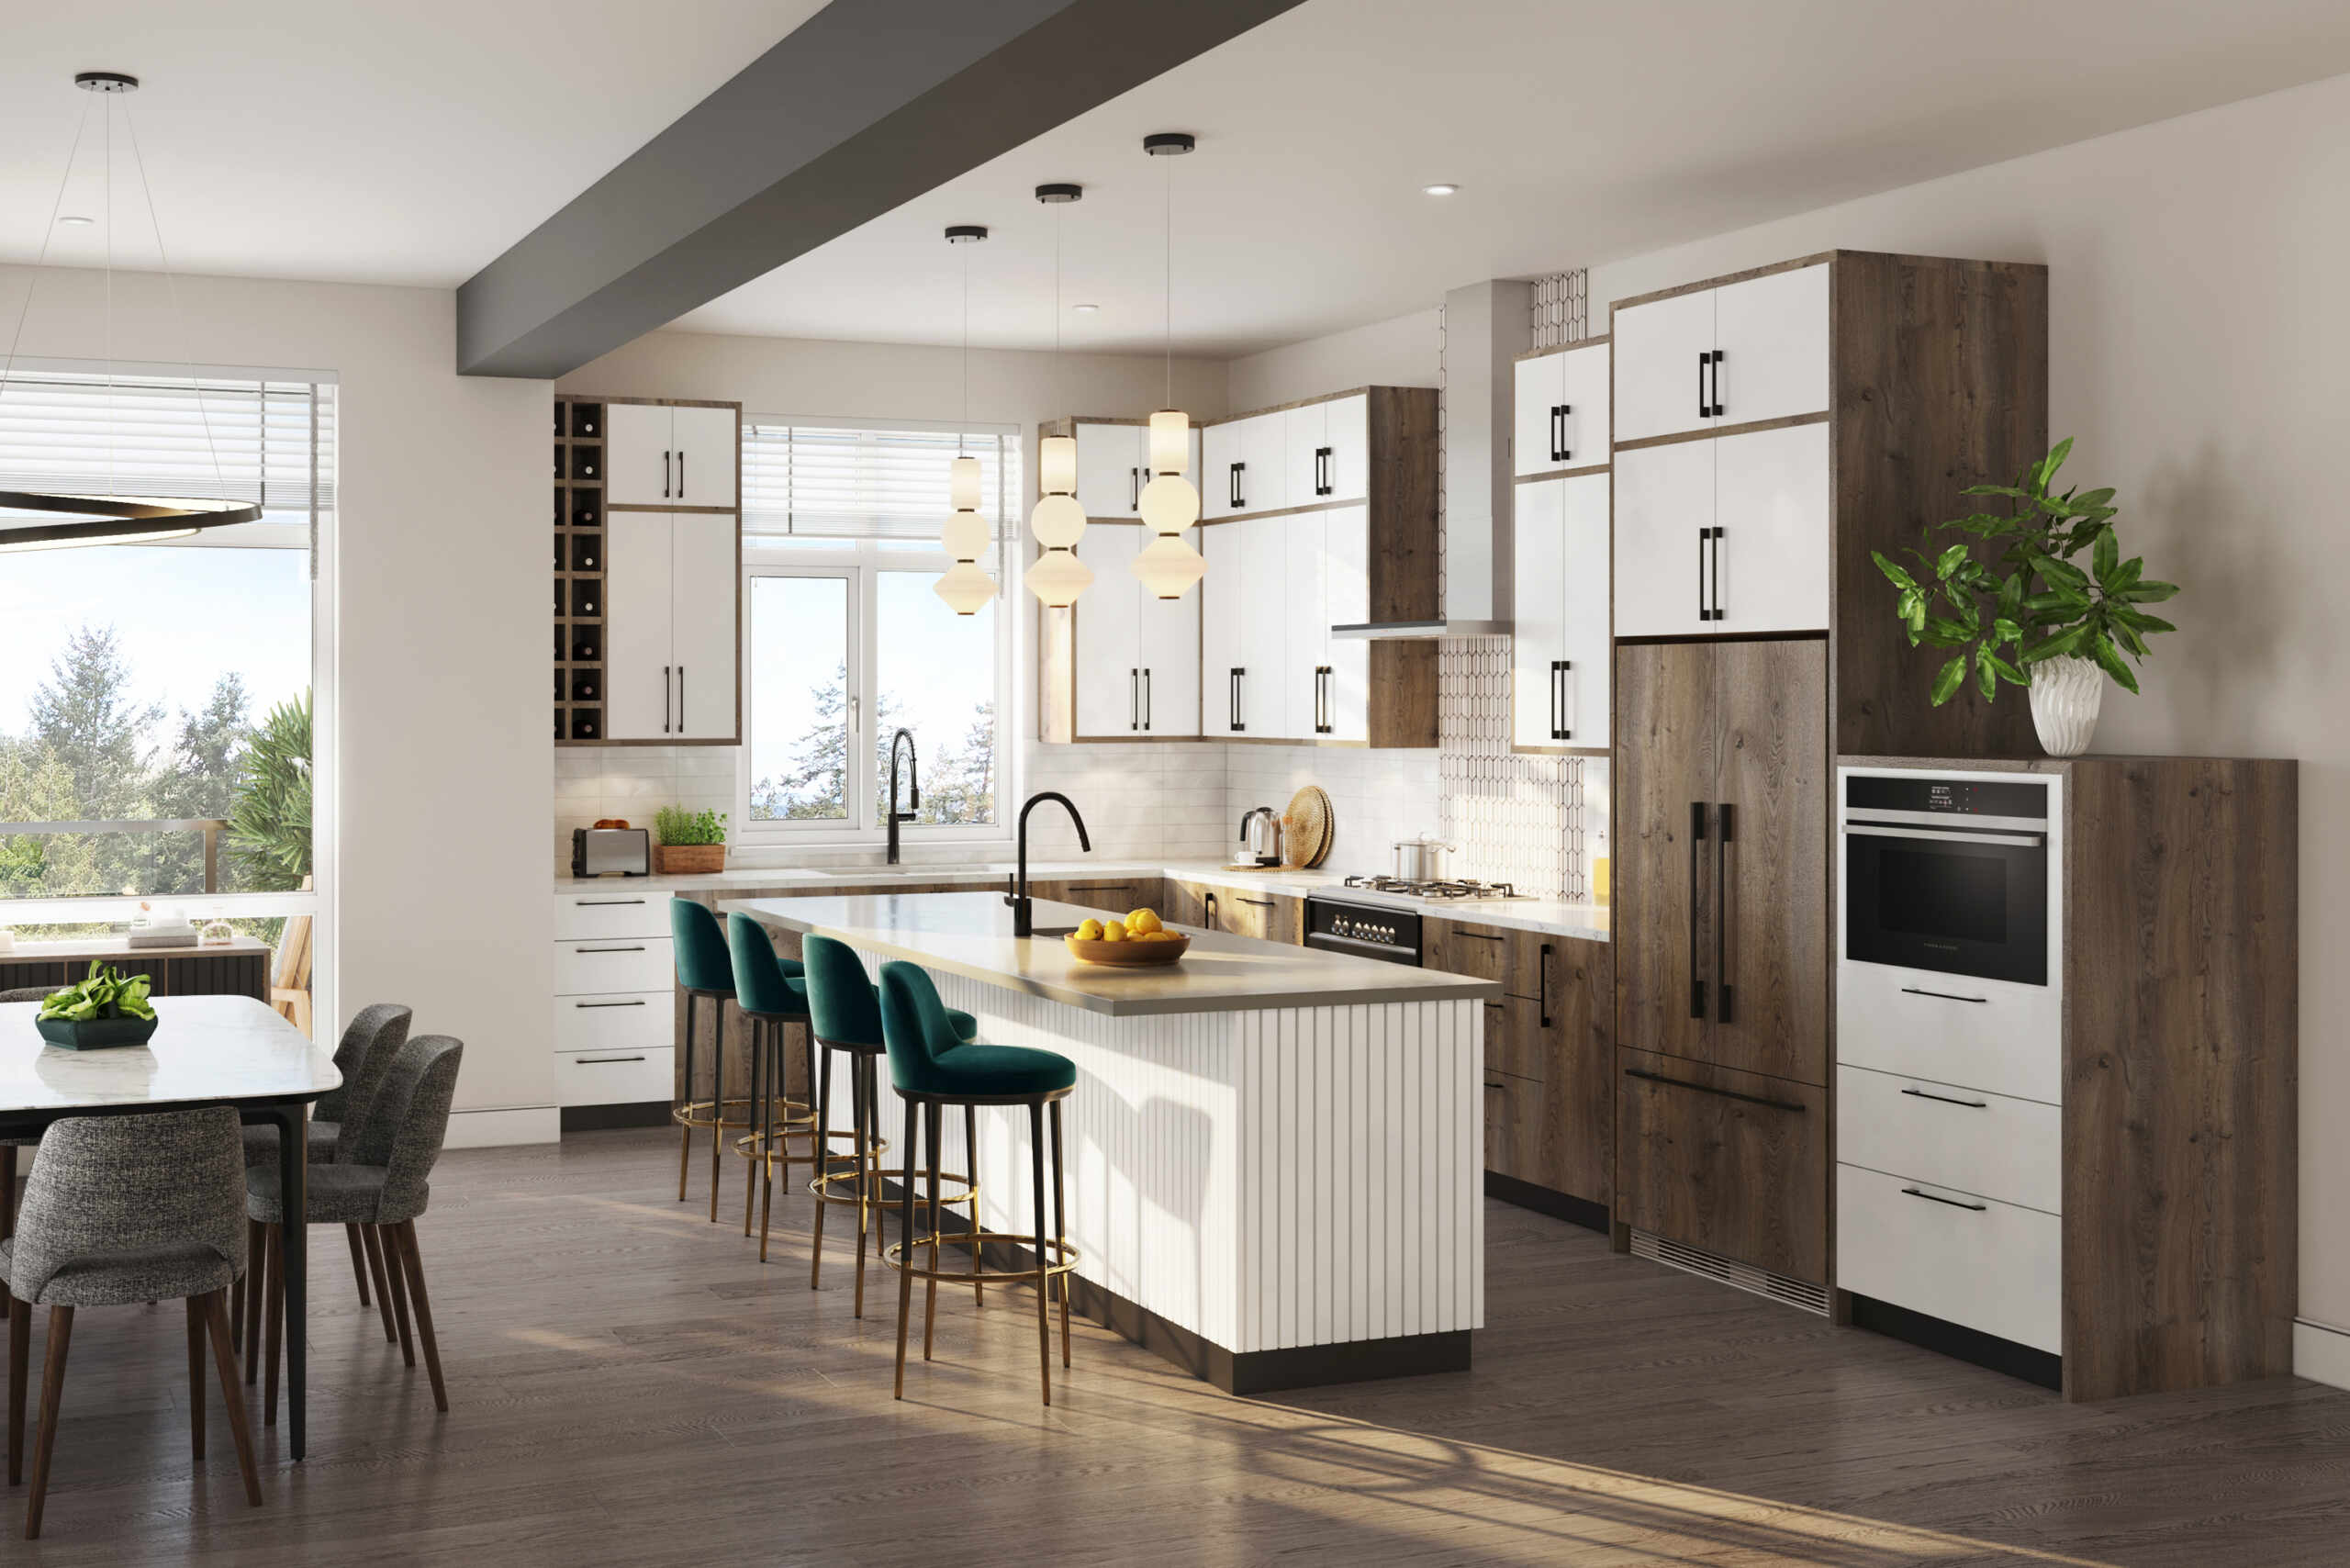 spacious kitchen with elegant finishes